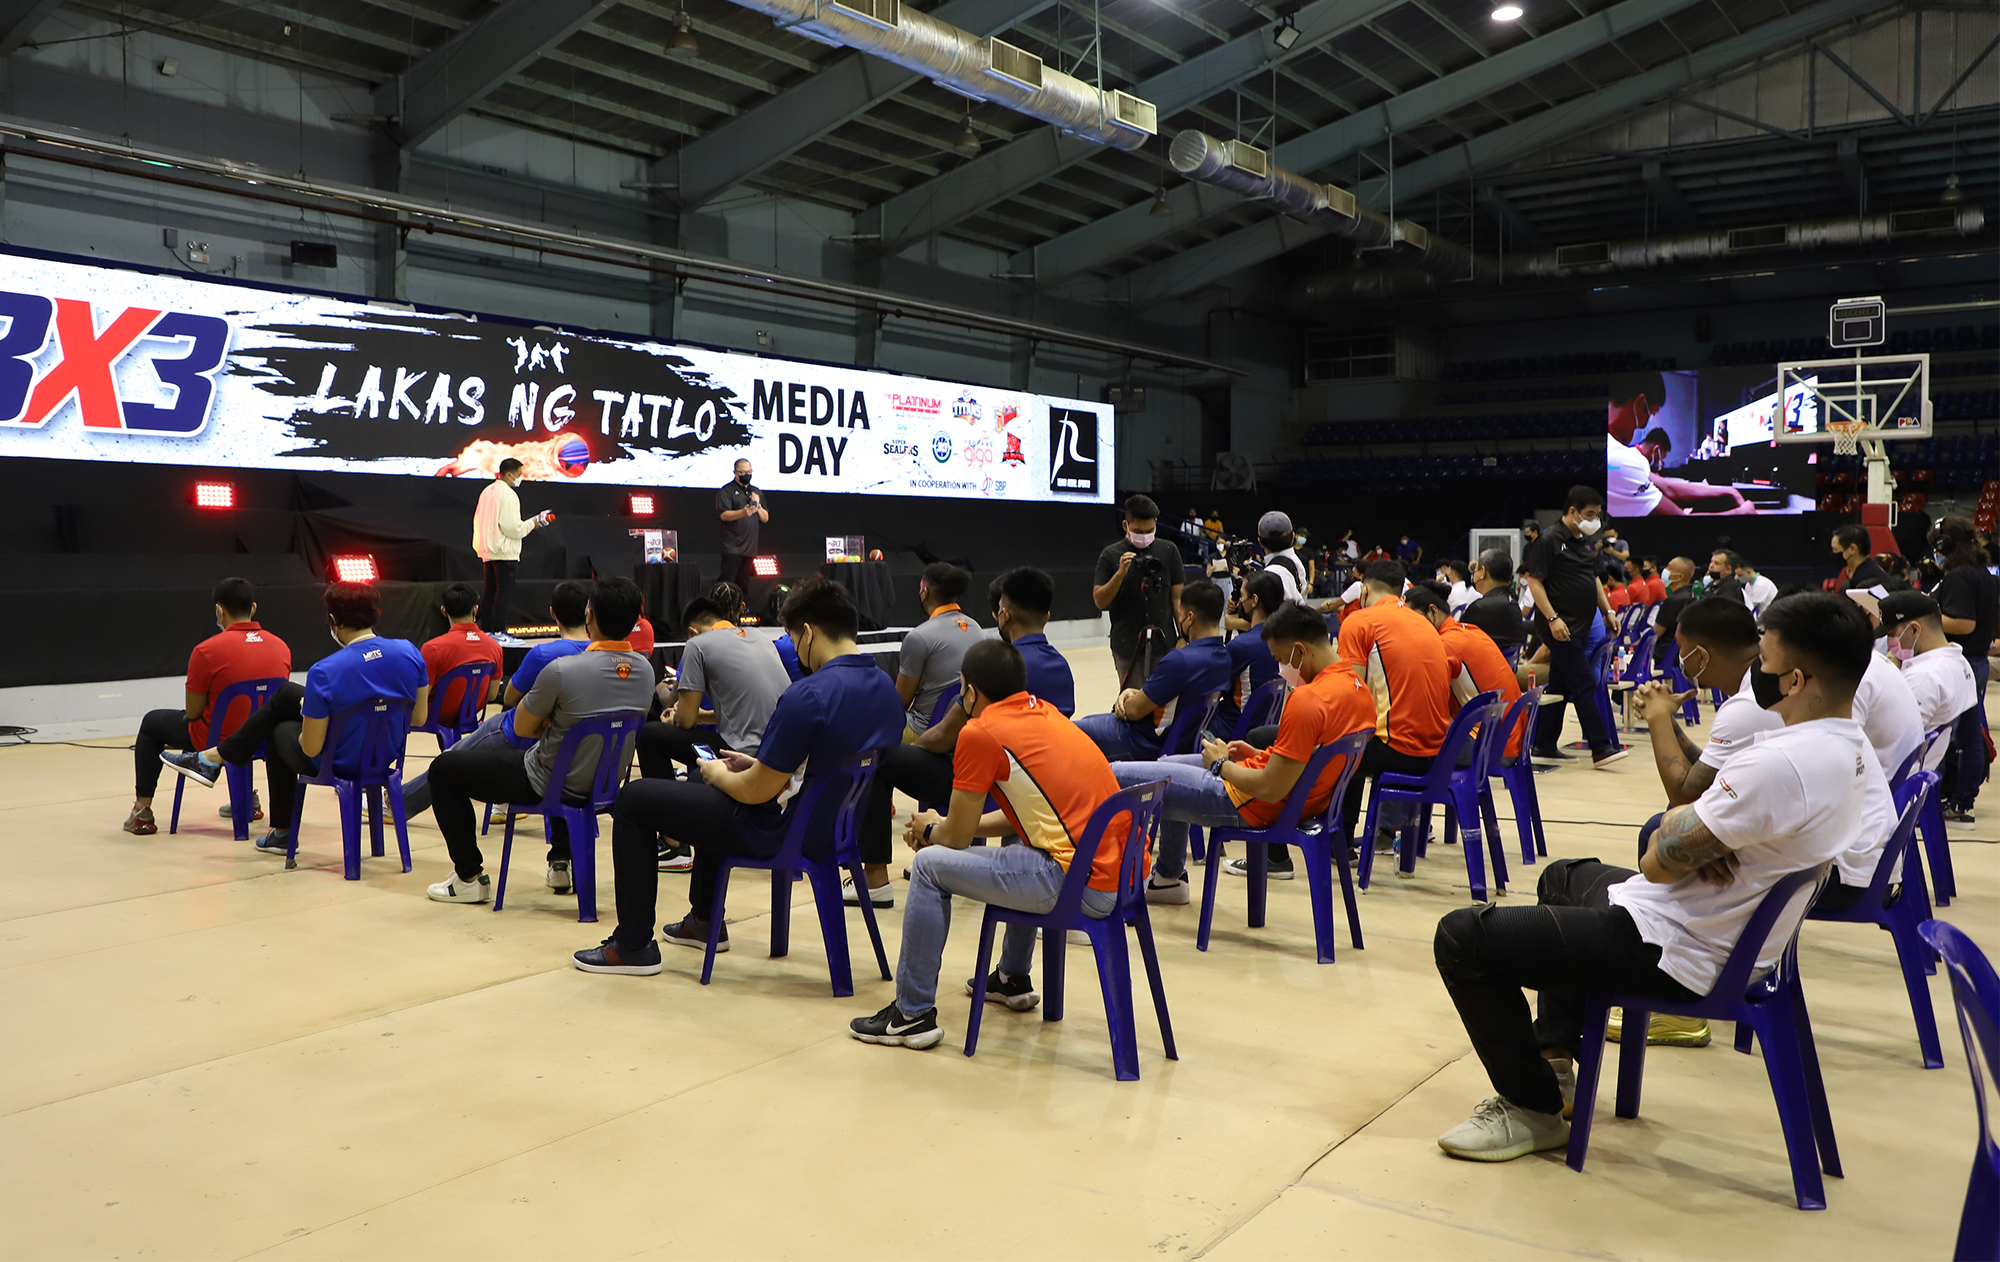 PBA 3x3 Media day on Saturday at Ynares Sports Arena, Pasig.